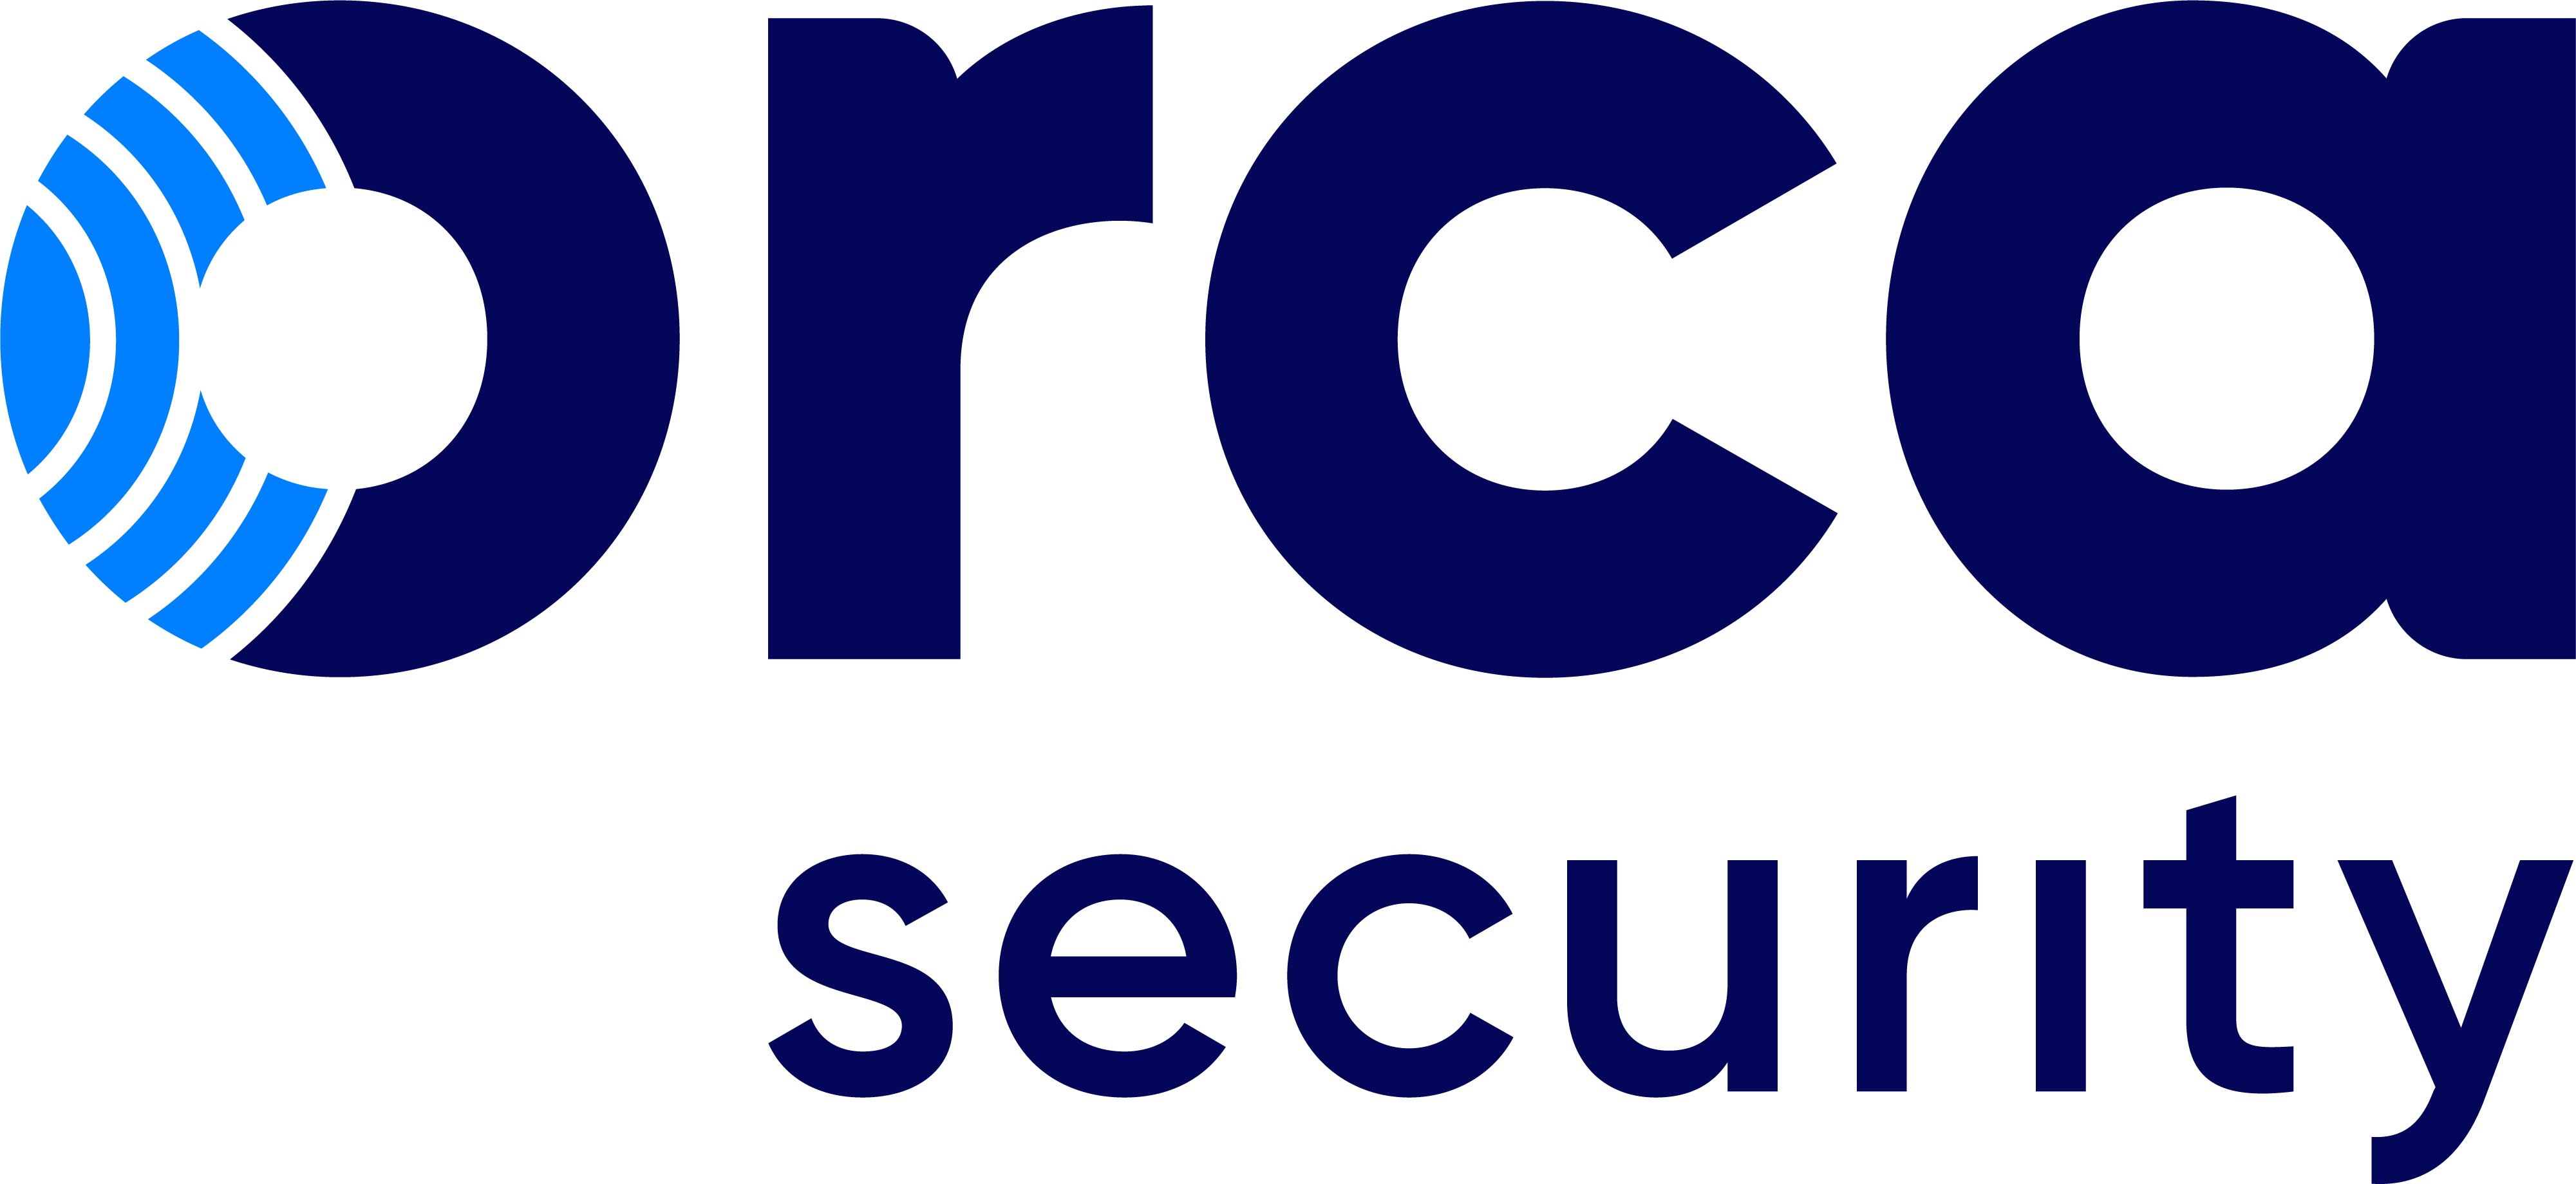 Orca Security company logo